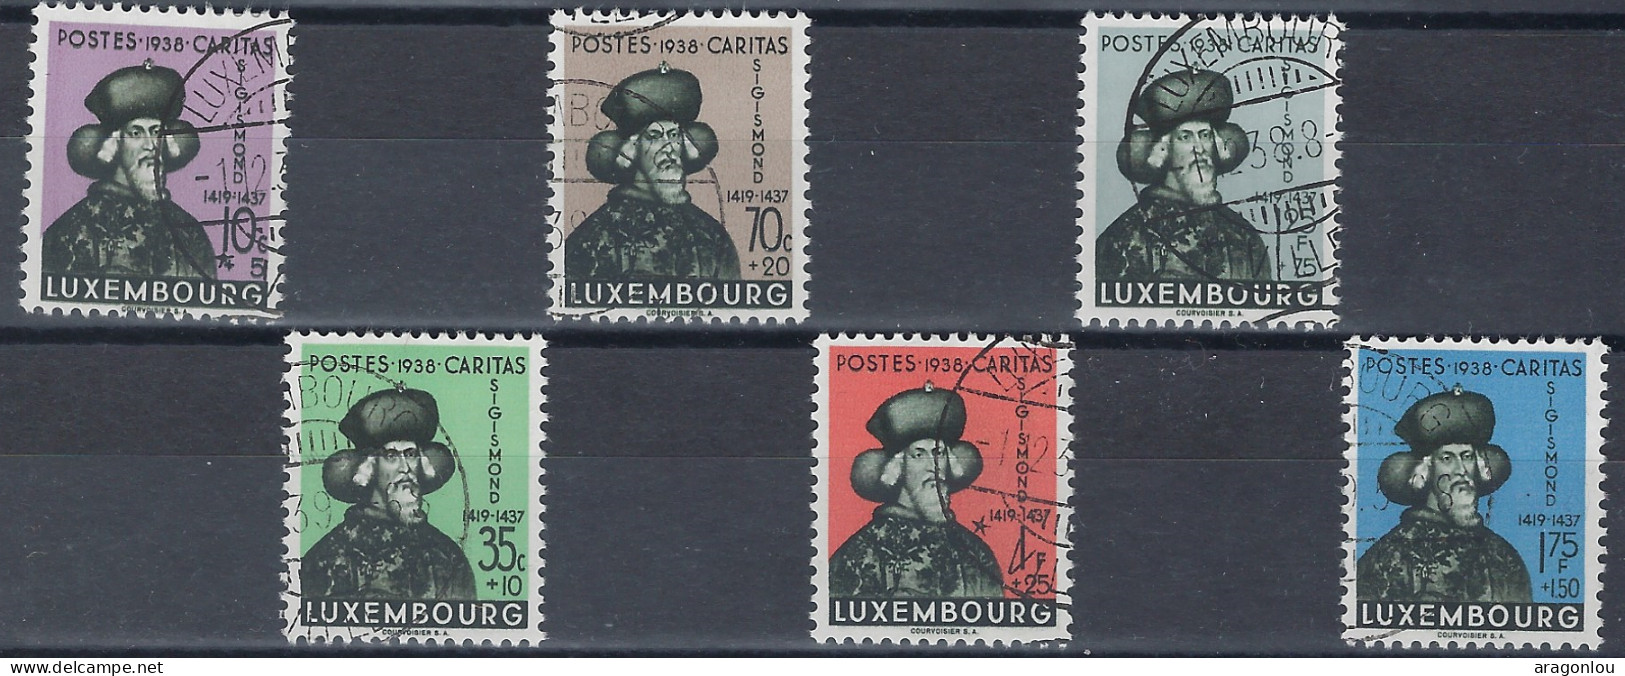 Luxembourg - Luxemburrg - Timbres  1938   Sigismund   Série   ° - Gebraucht